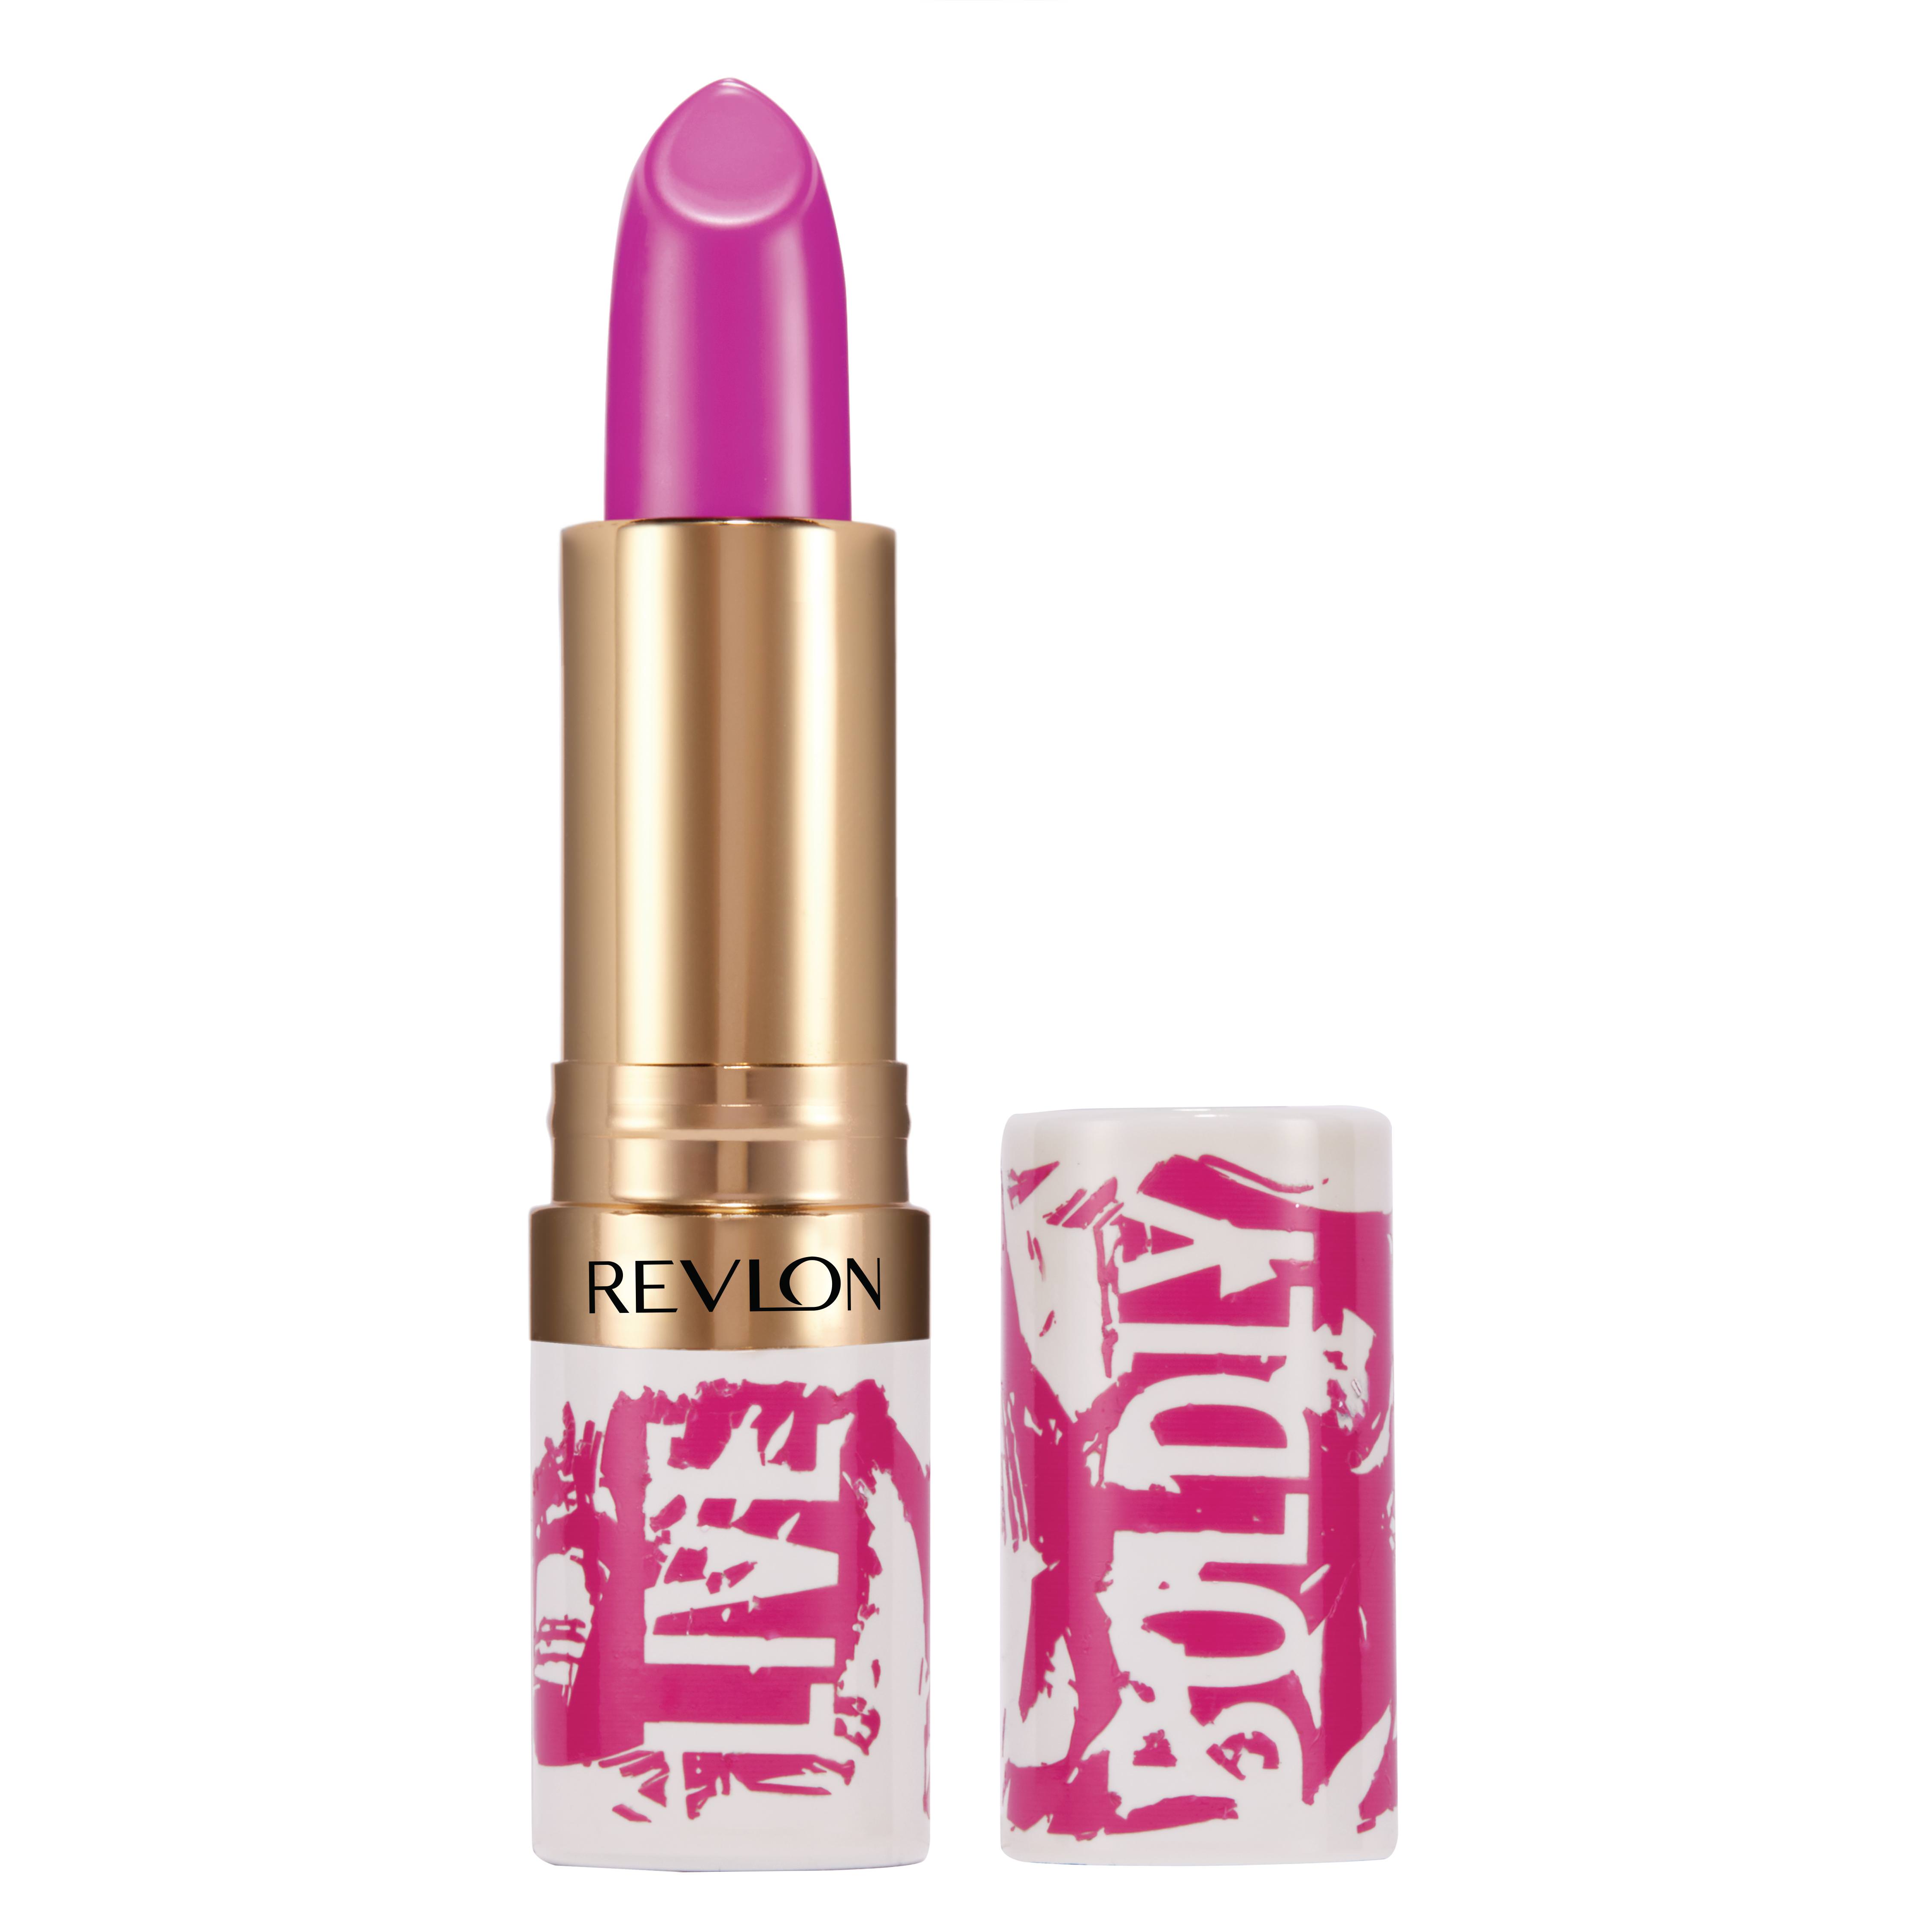 Revlon Live Boldly Super Lustrous Lipstick, Boss Lady - image 1 of 2